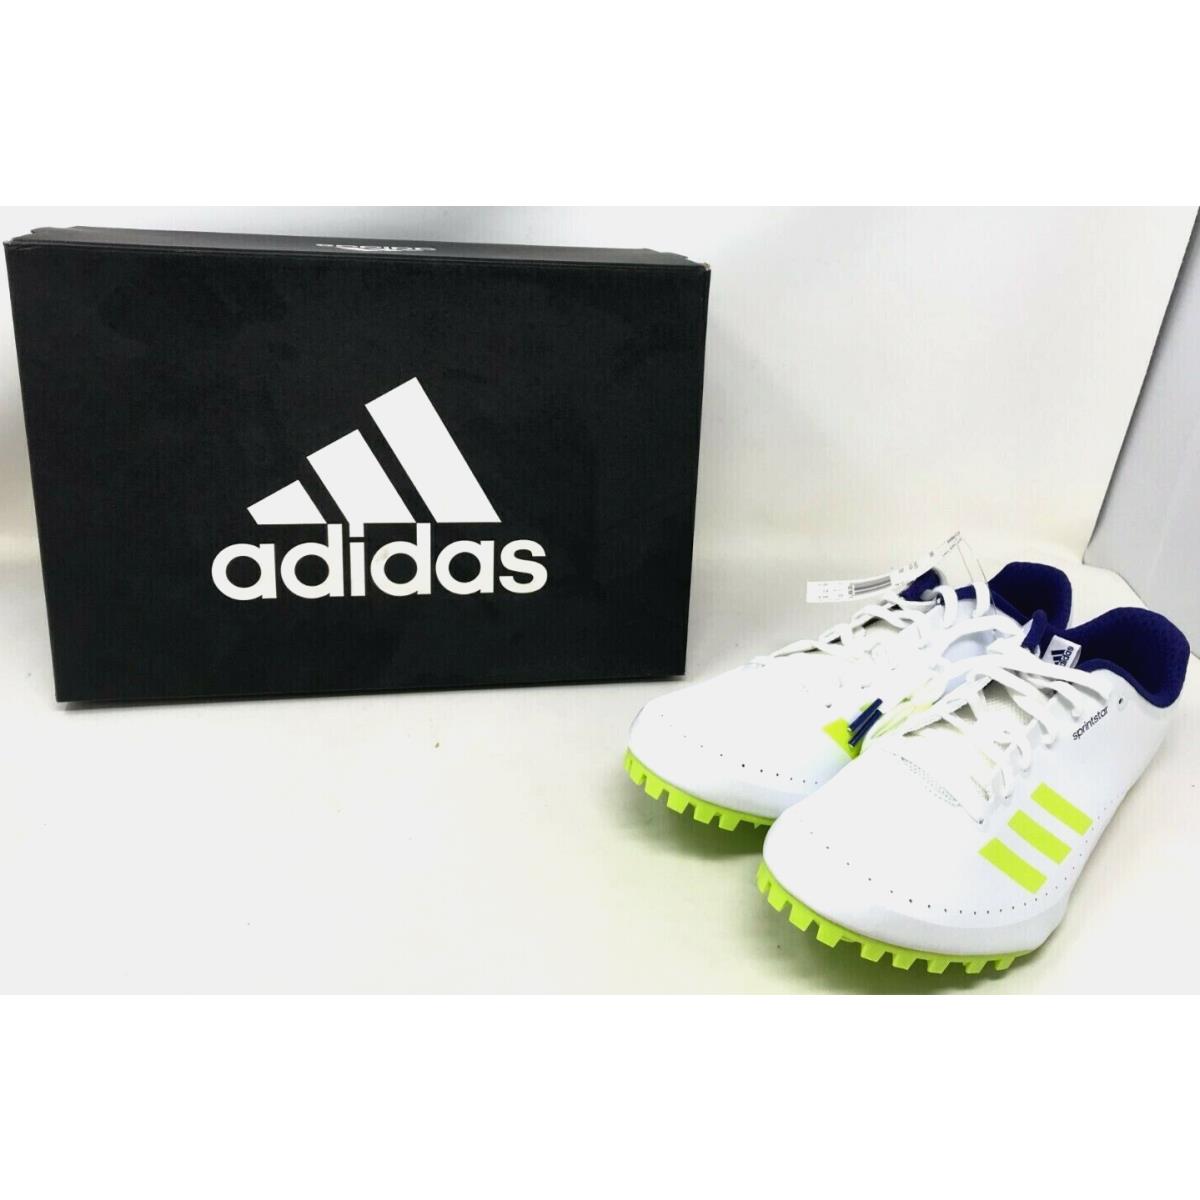 Adidas shoes Sprintstar - White 1